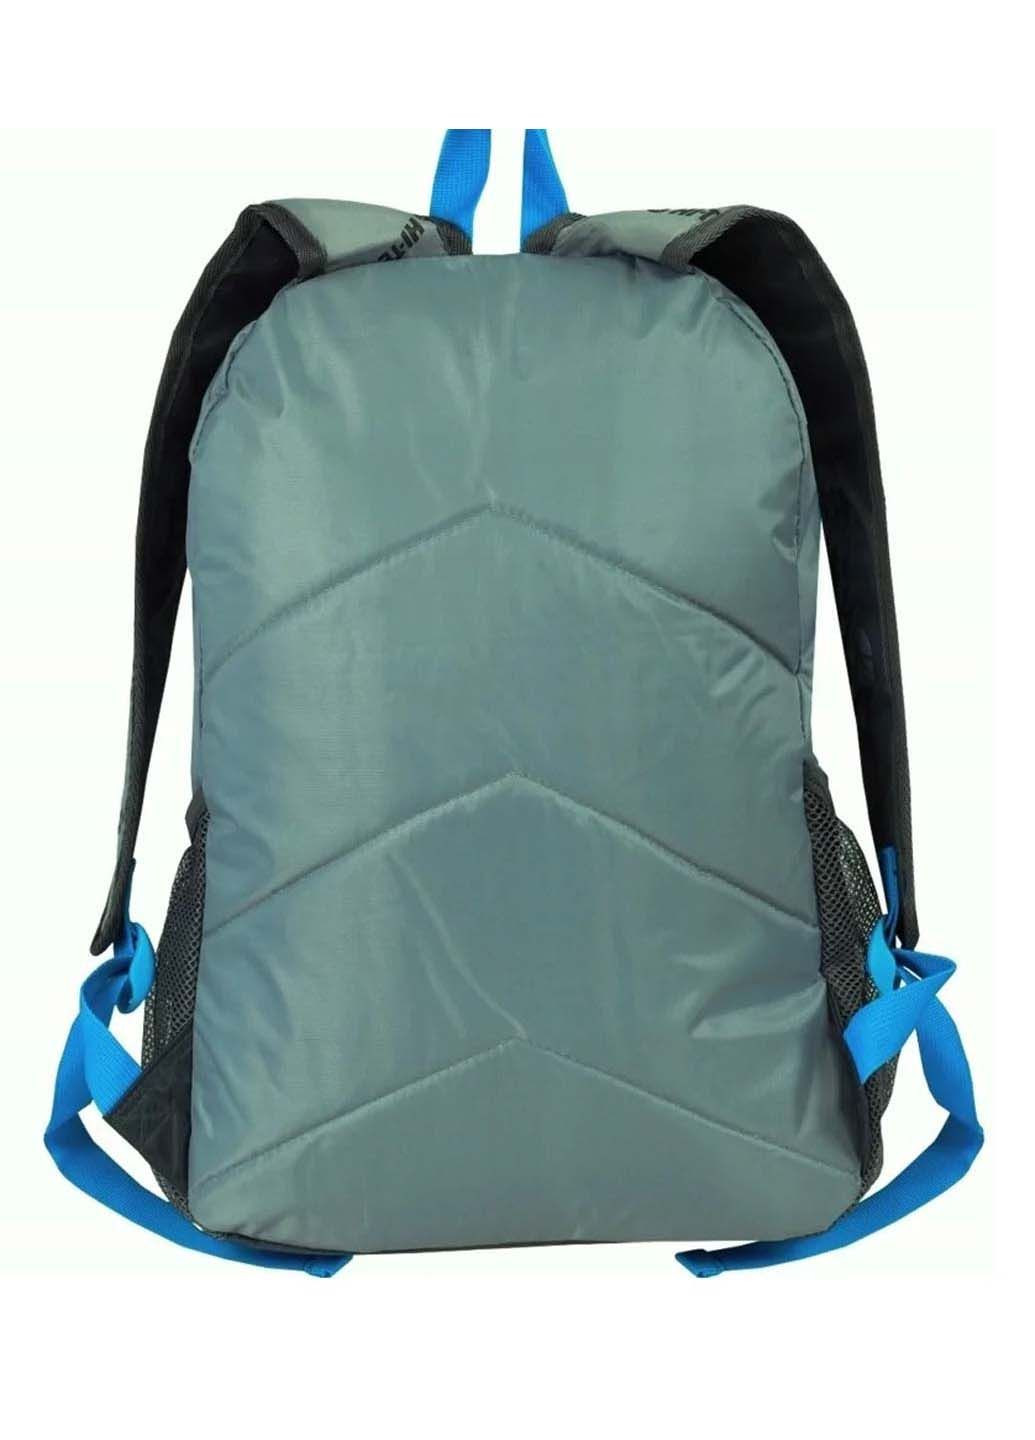 Легкий спортивный рюкзак MS62457 18L Hi-Tec (291376458)